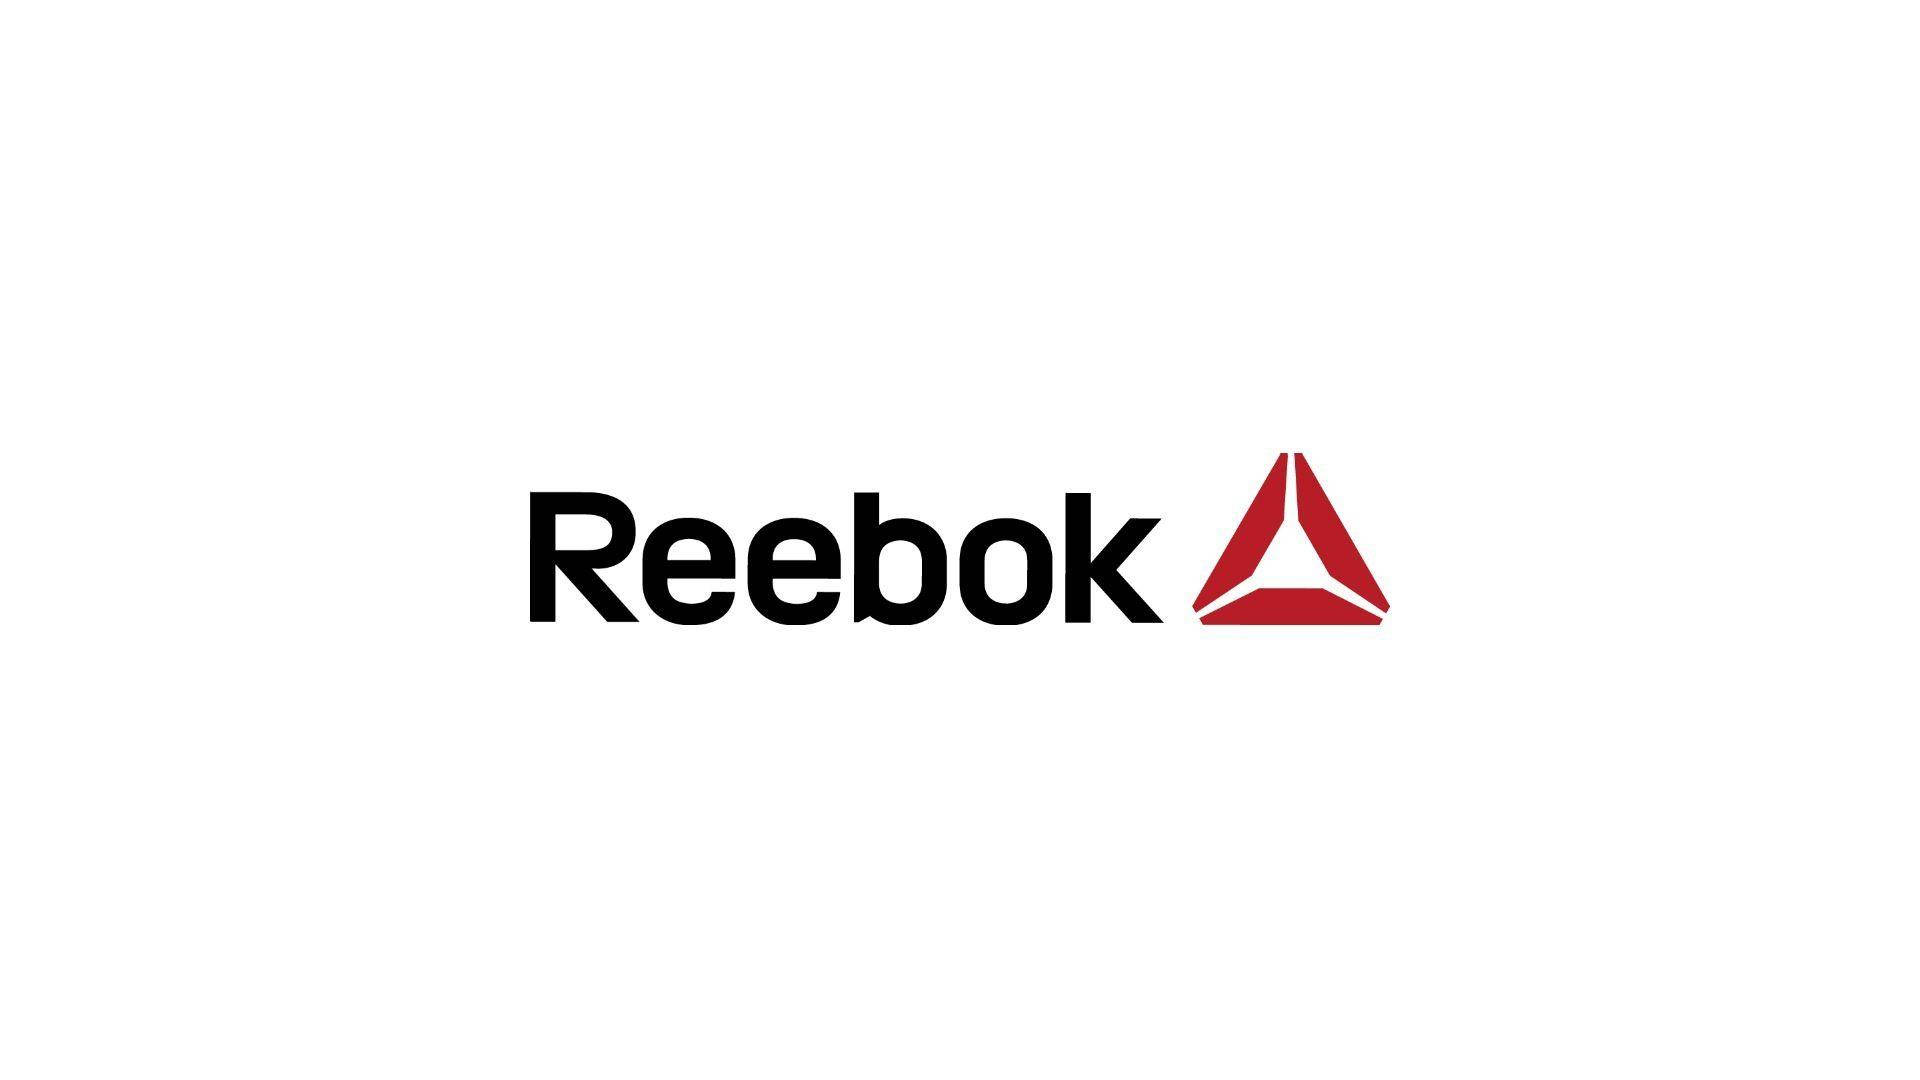 Reebok Pictures